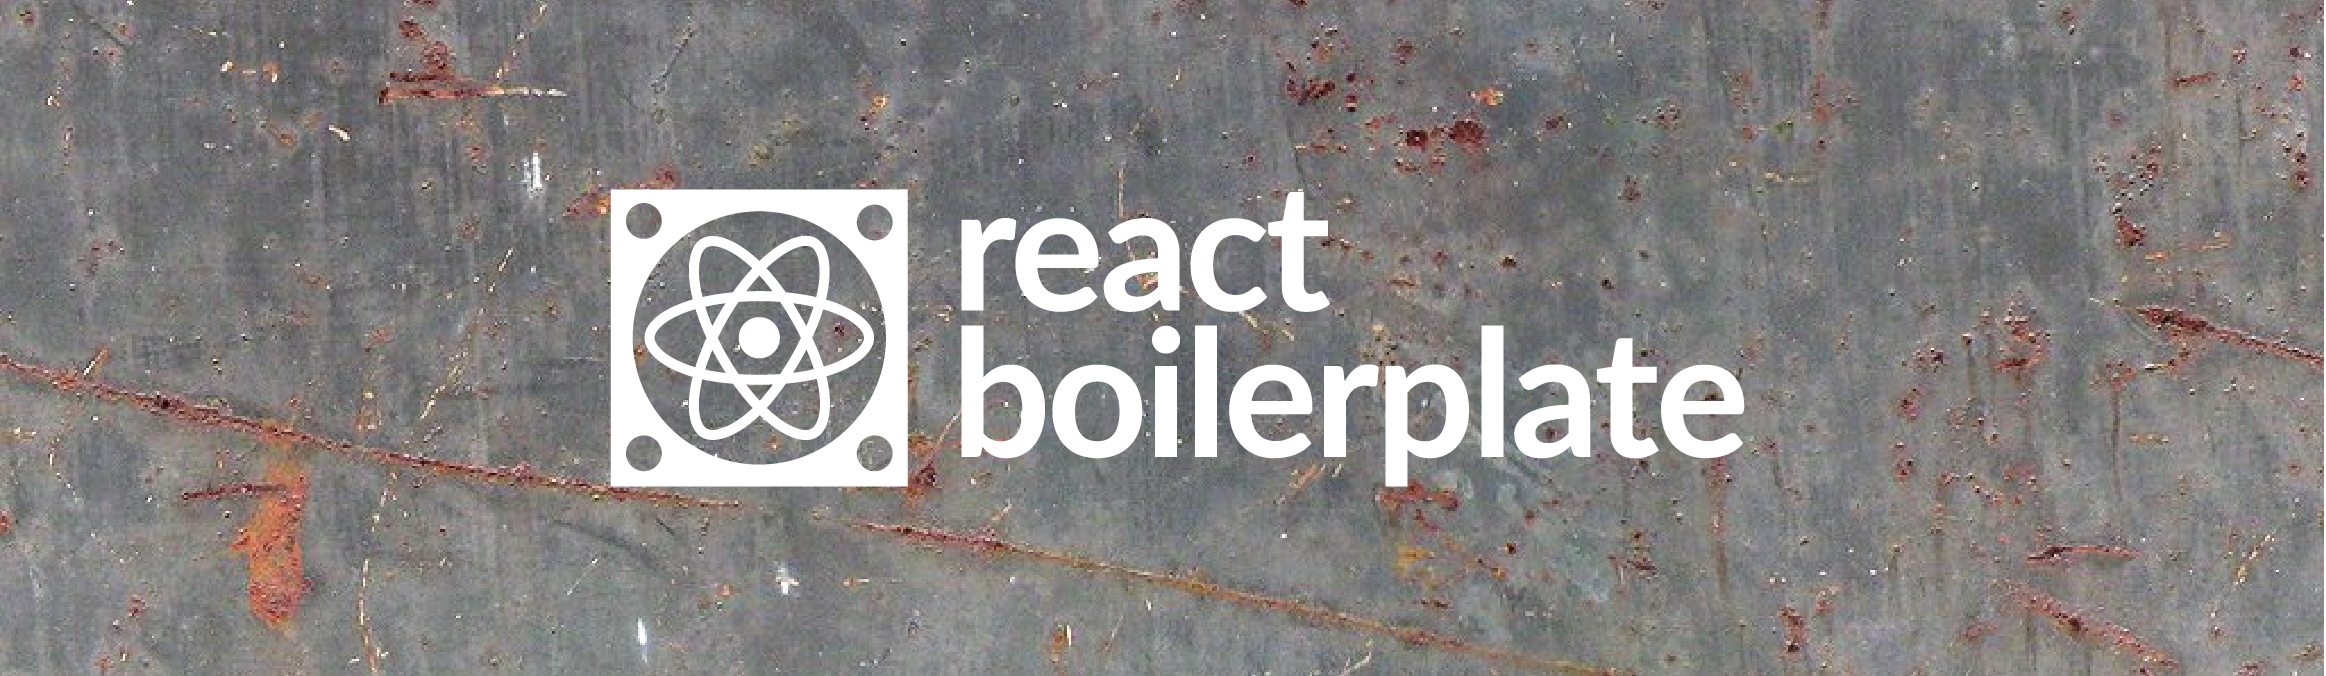 react boilerplate banner